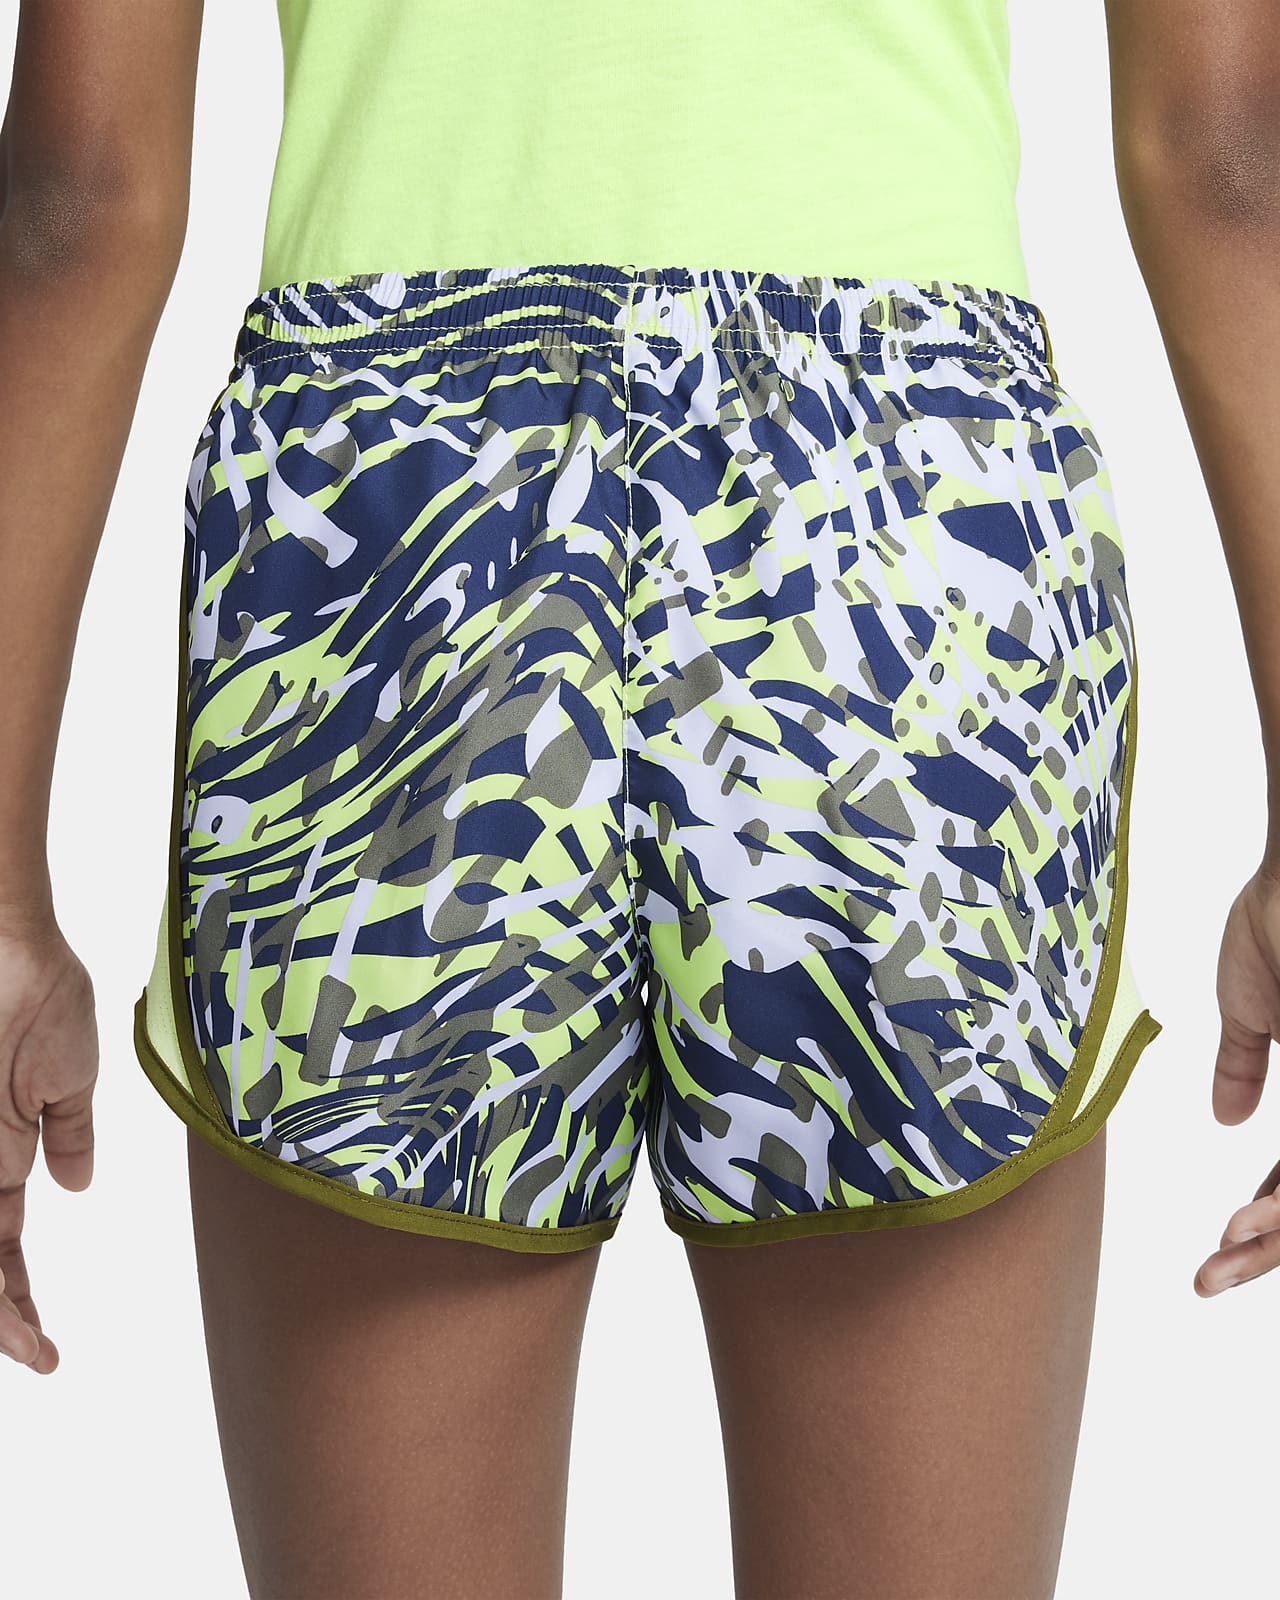 Stylish Navy/White Nike Tempo Running Shorts for Girls